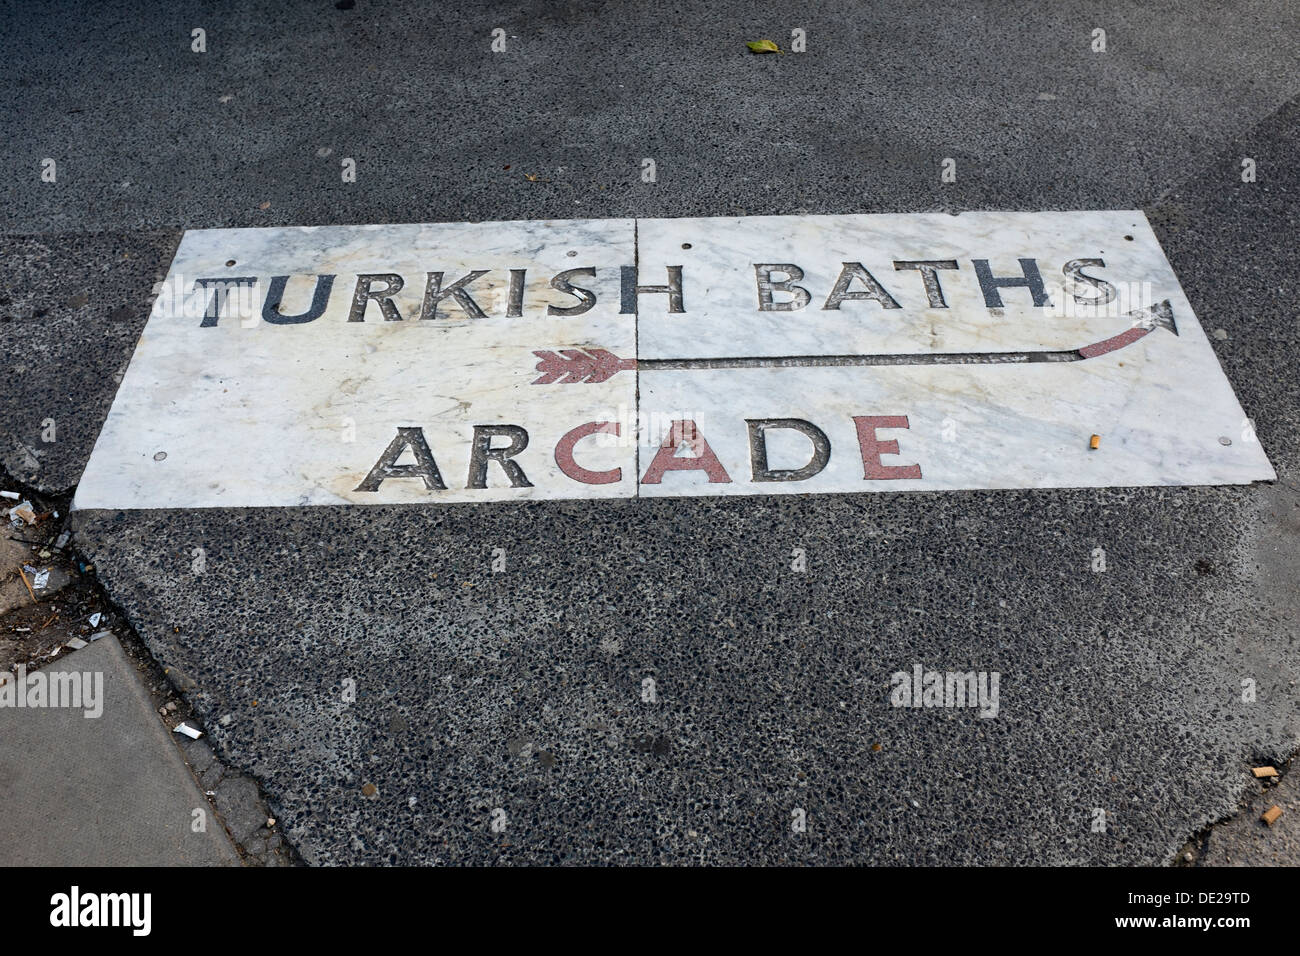 Turkish Baths Arcade Steet Pavement Sign Southampton Row London Stock Photo